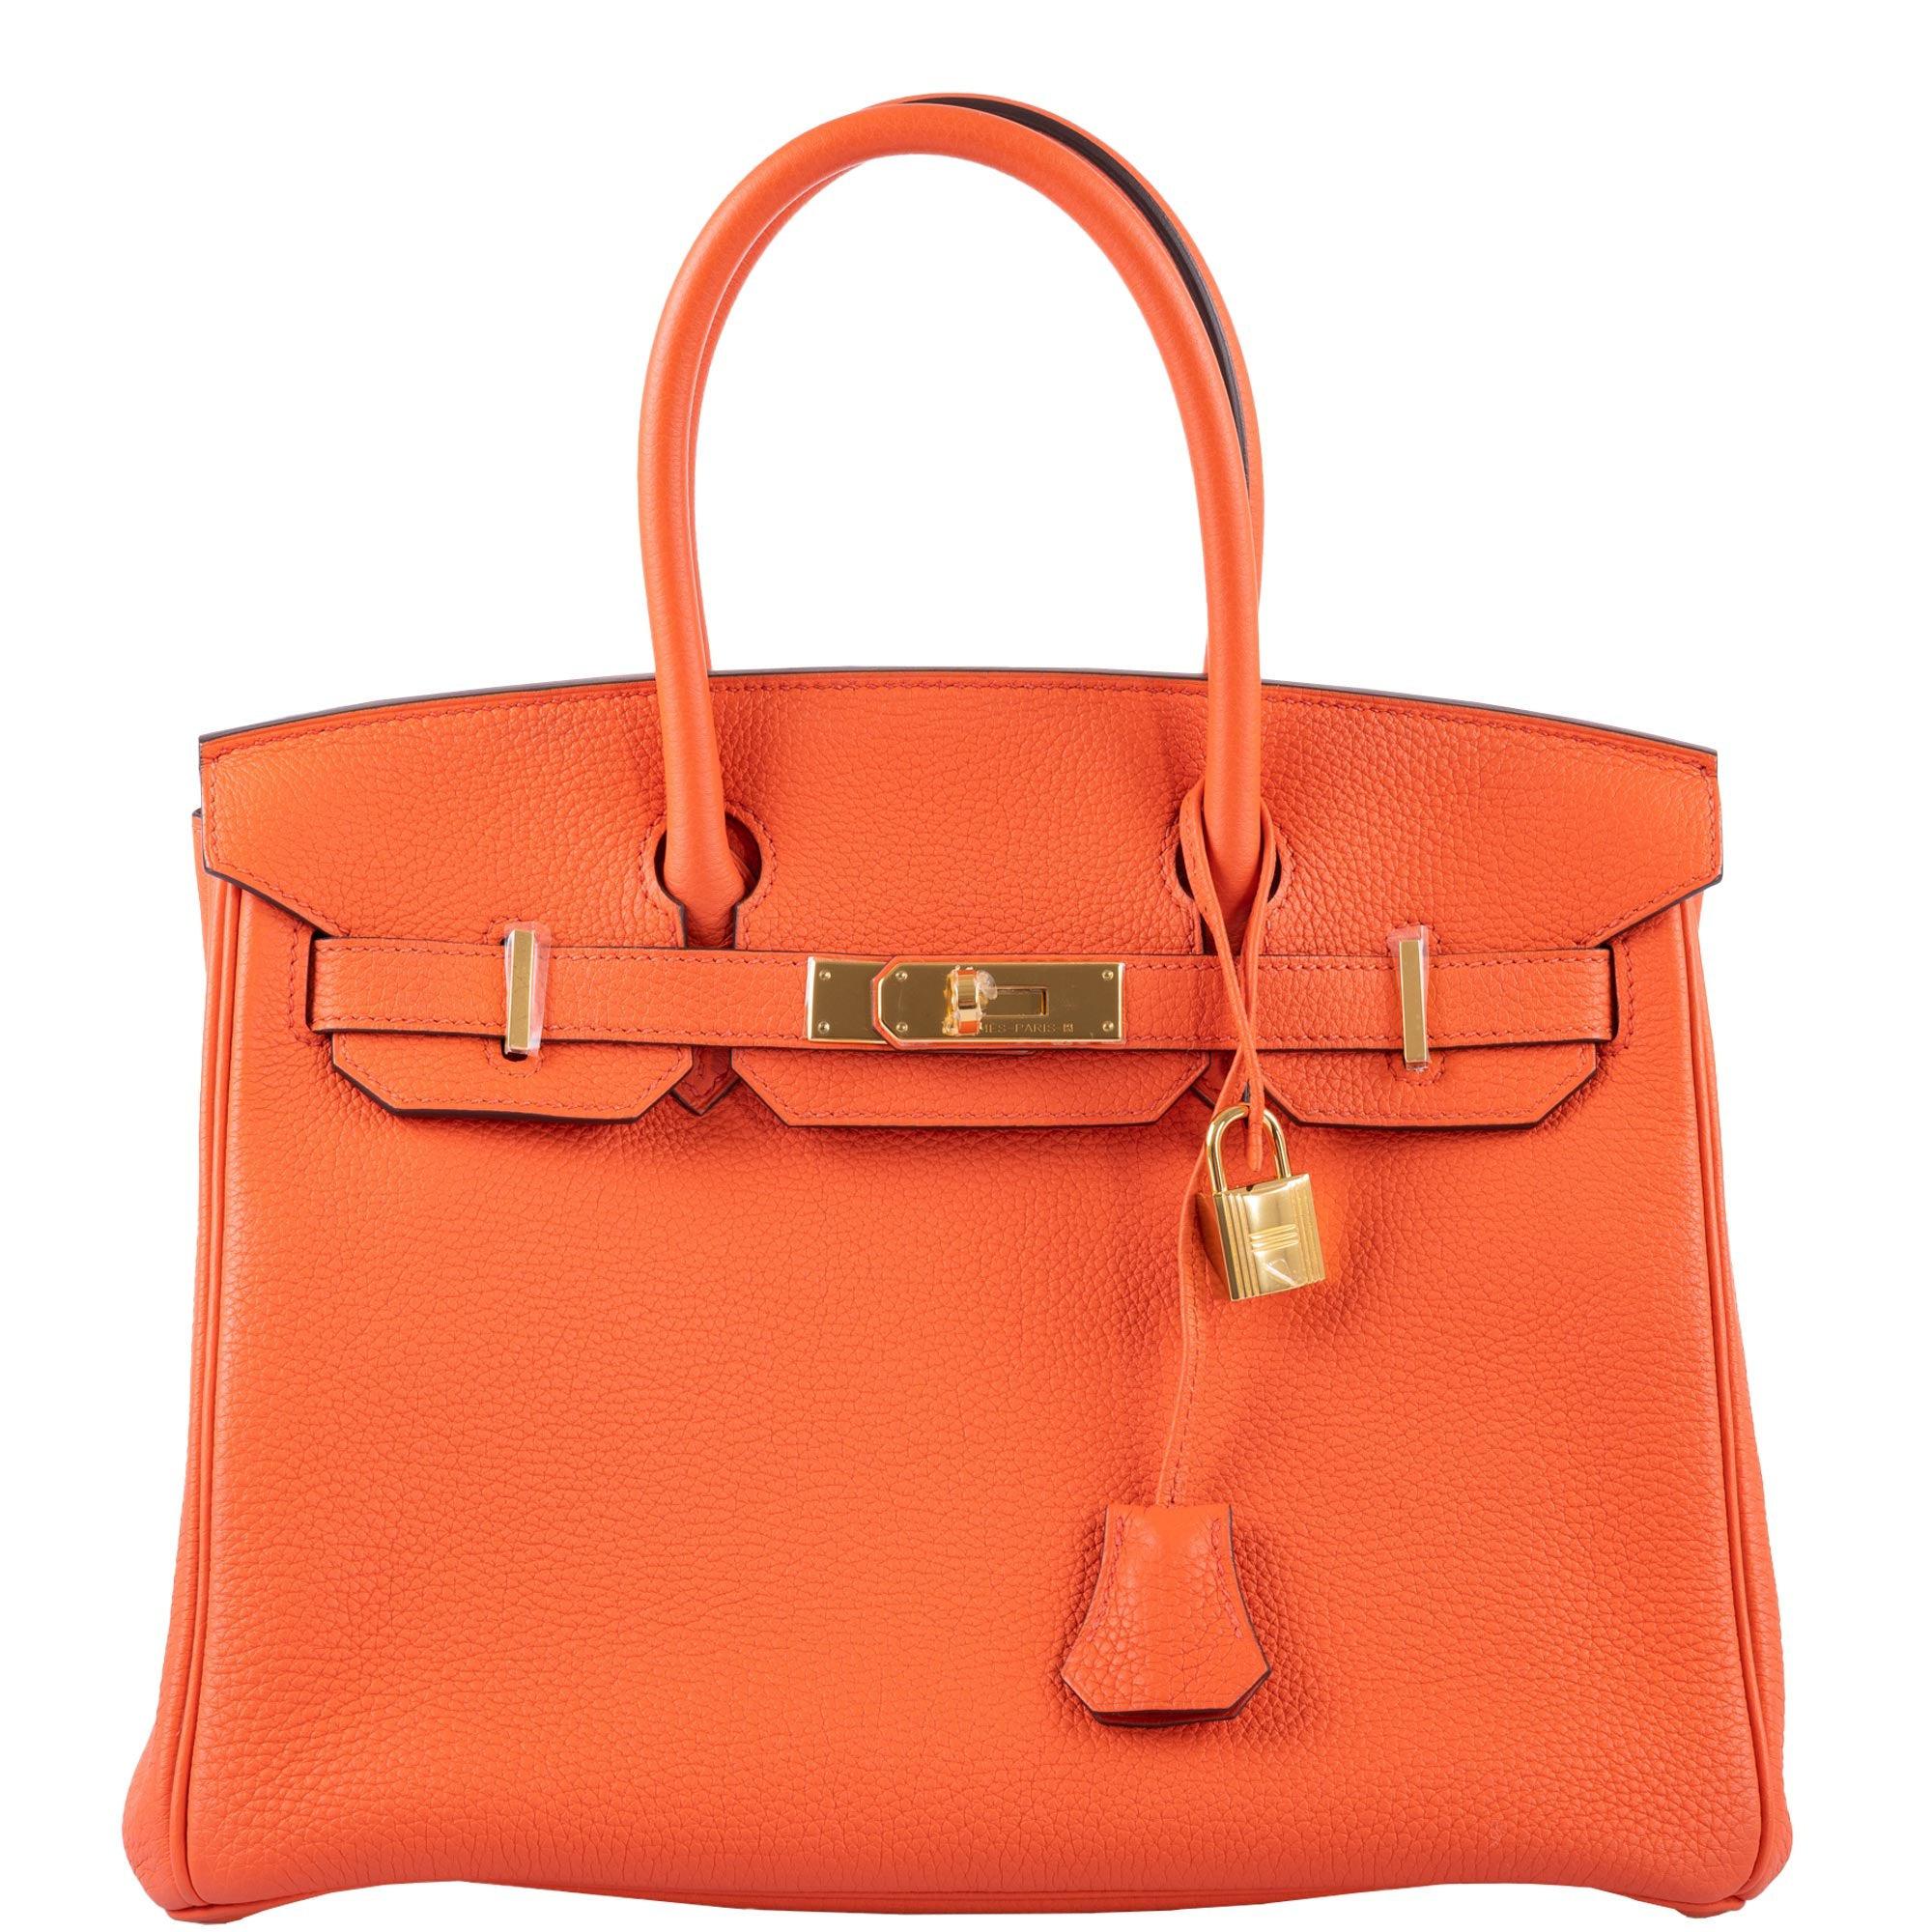 Buy Women's Hermes Birkin Bag 30cm Orange Togo Leather Purse